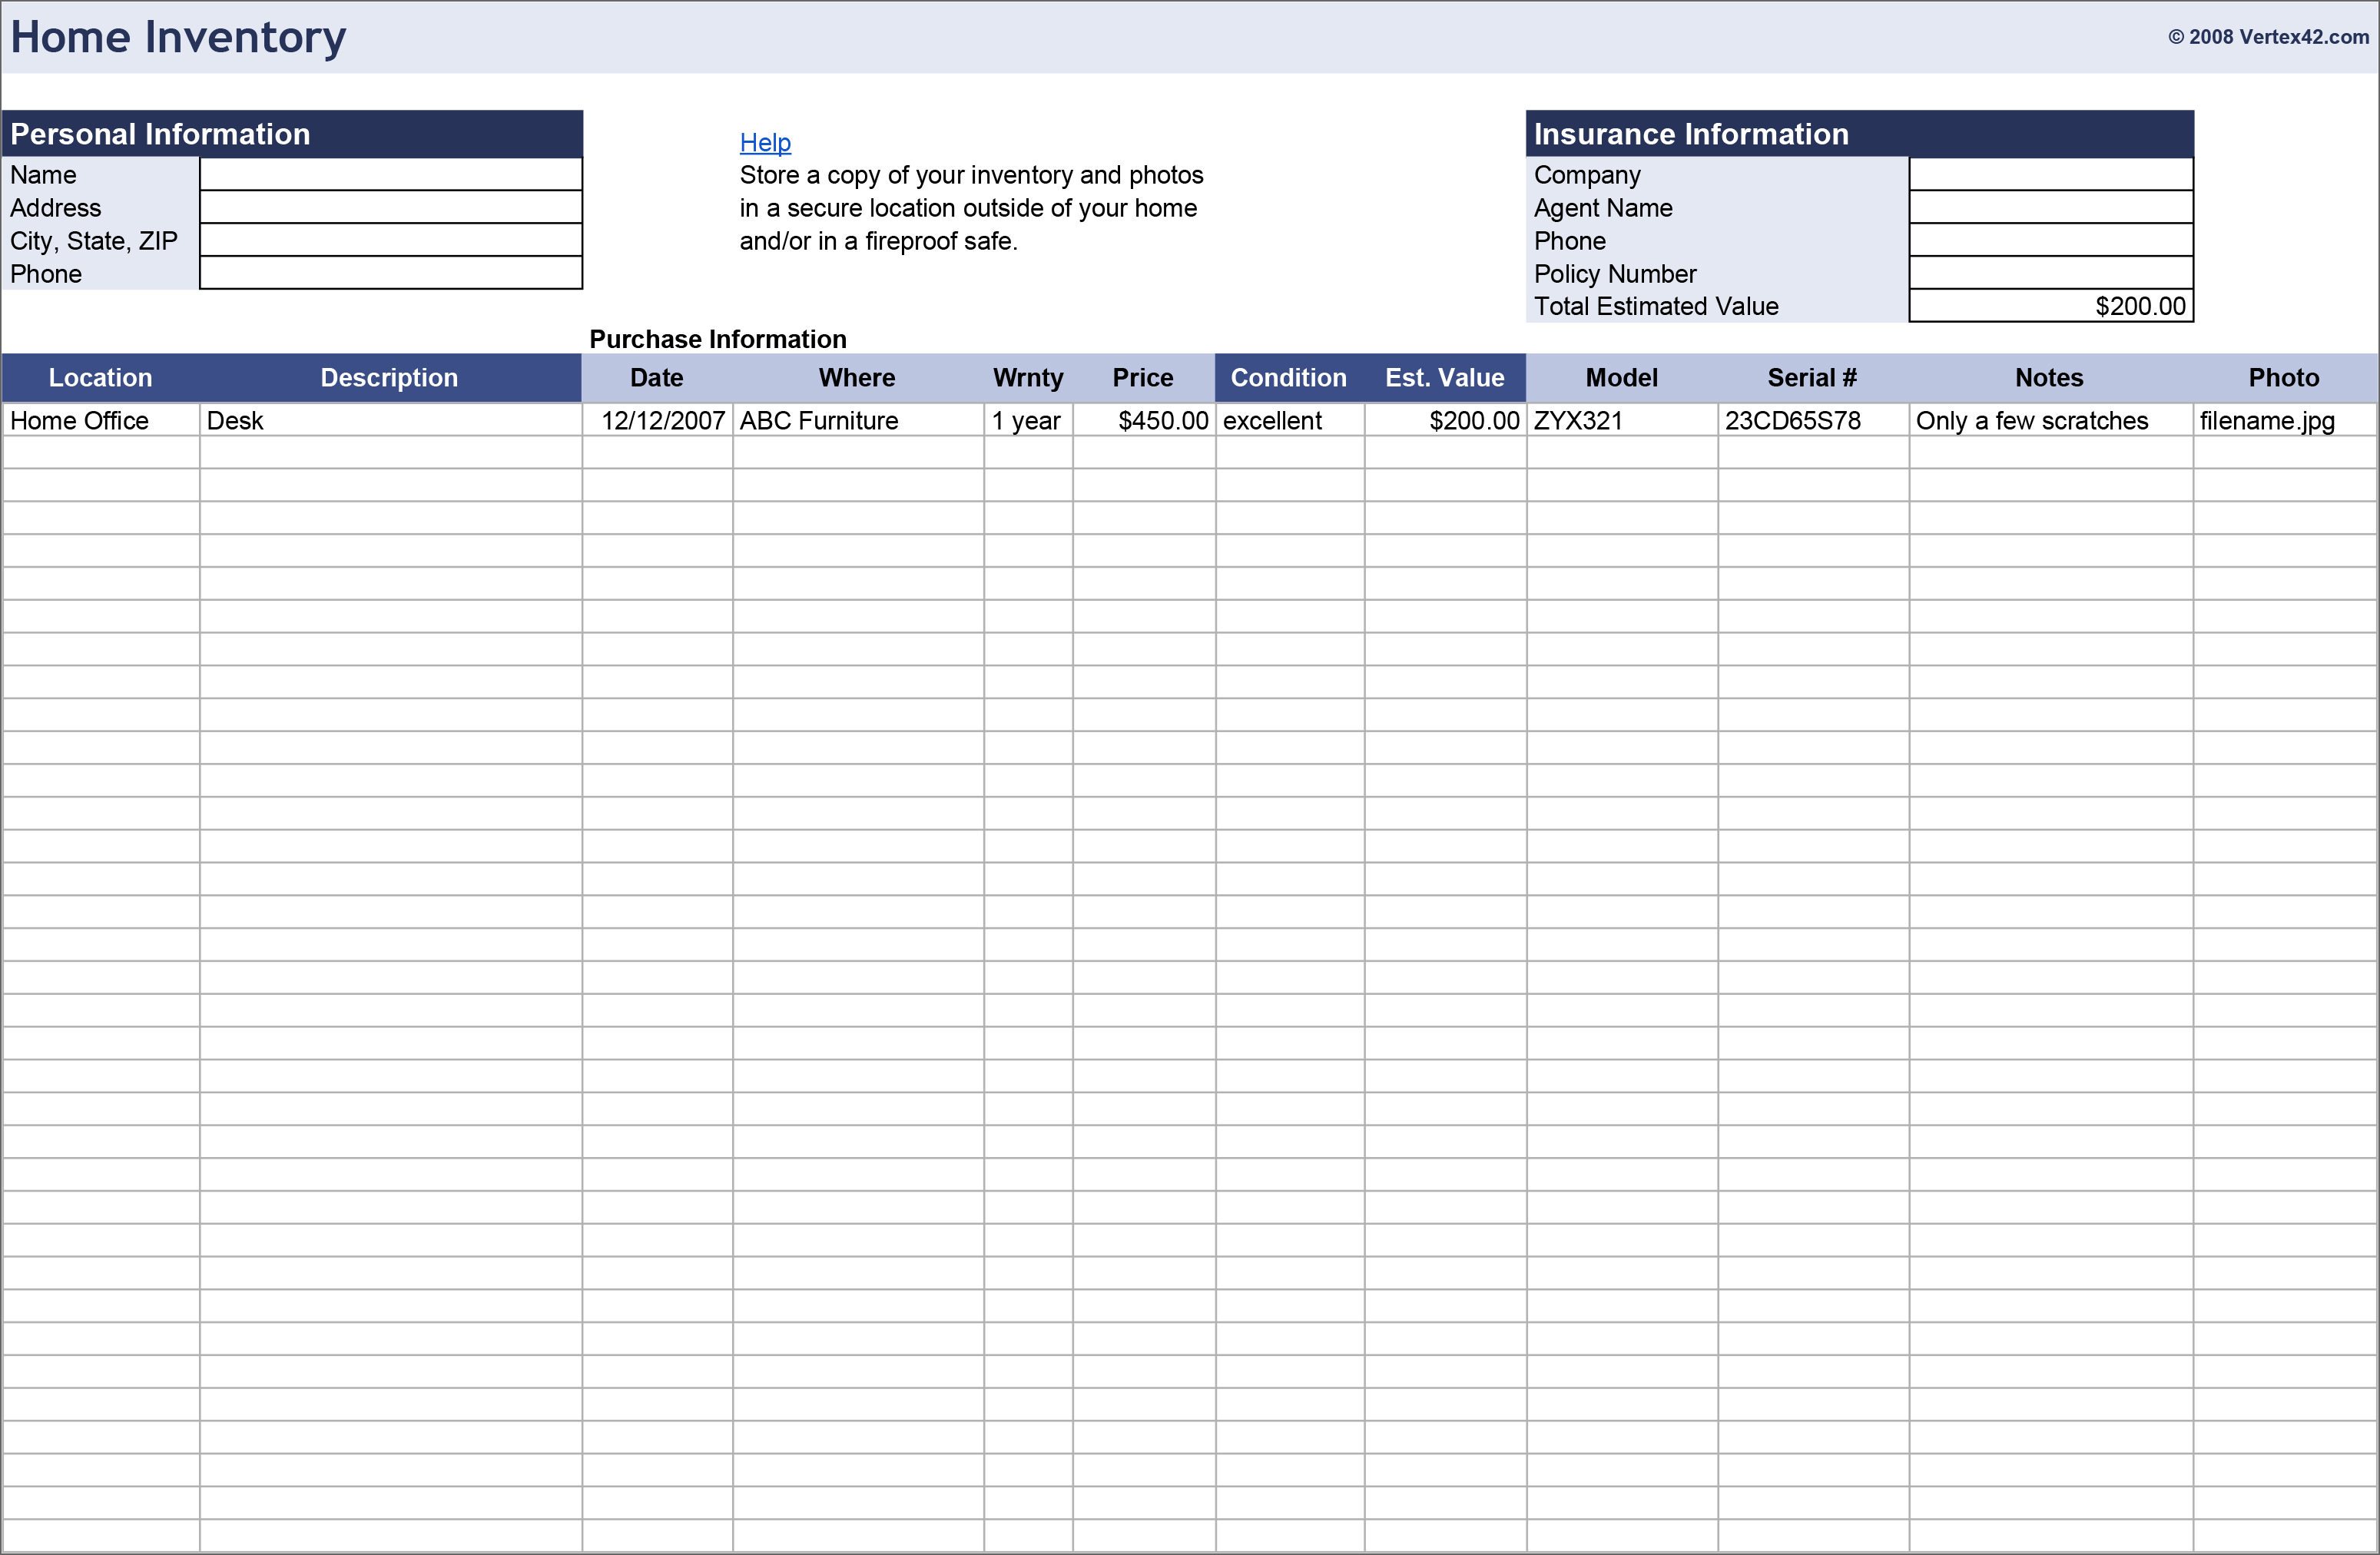 shop inventory sheet template pdf